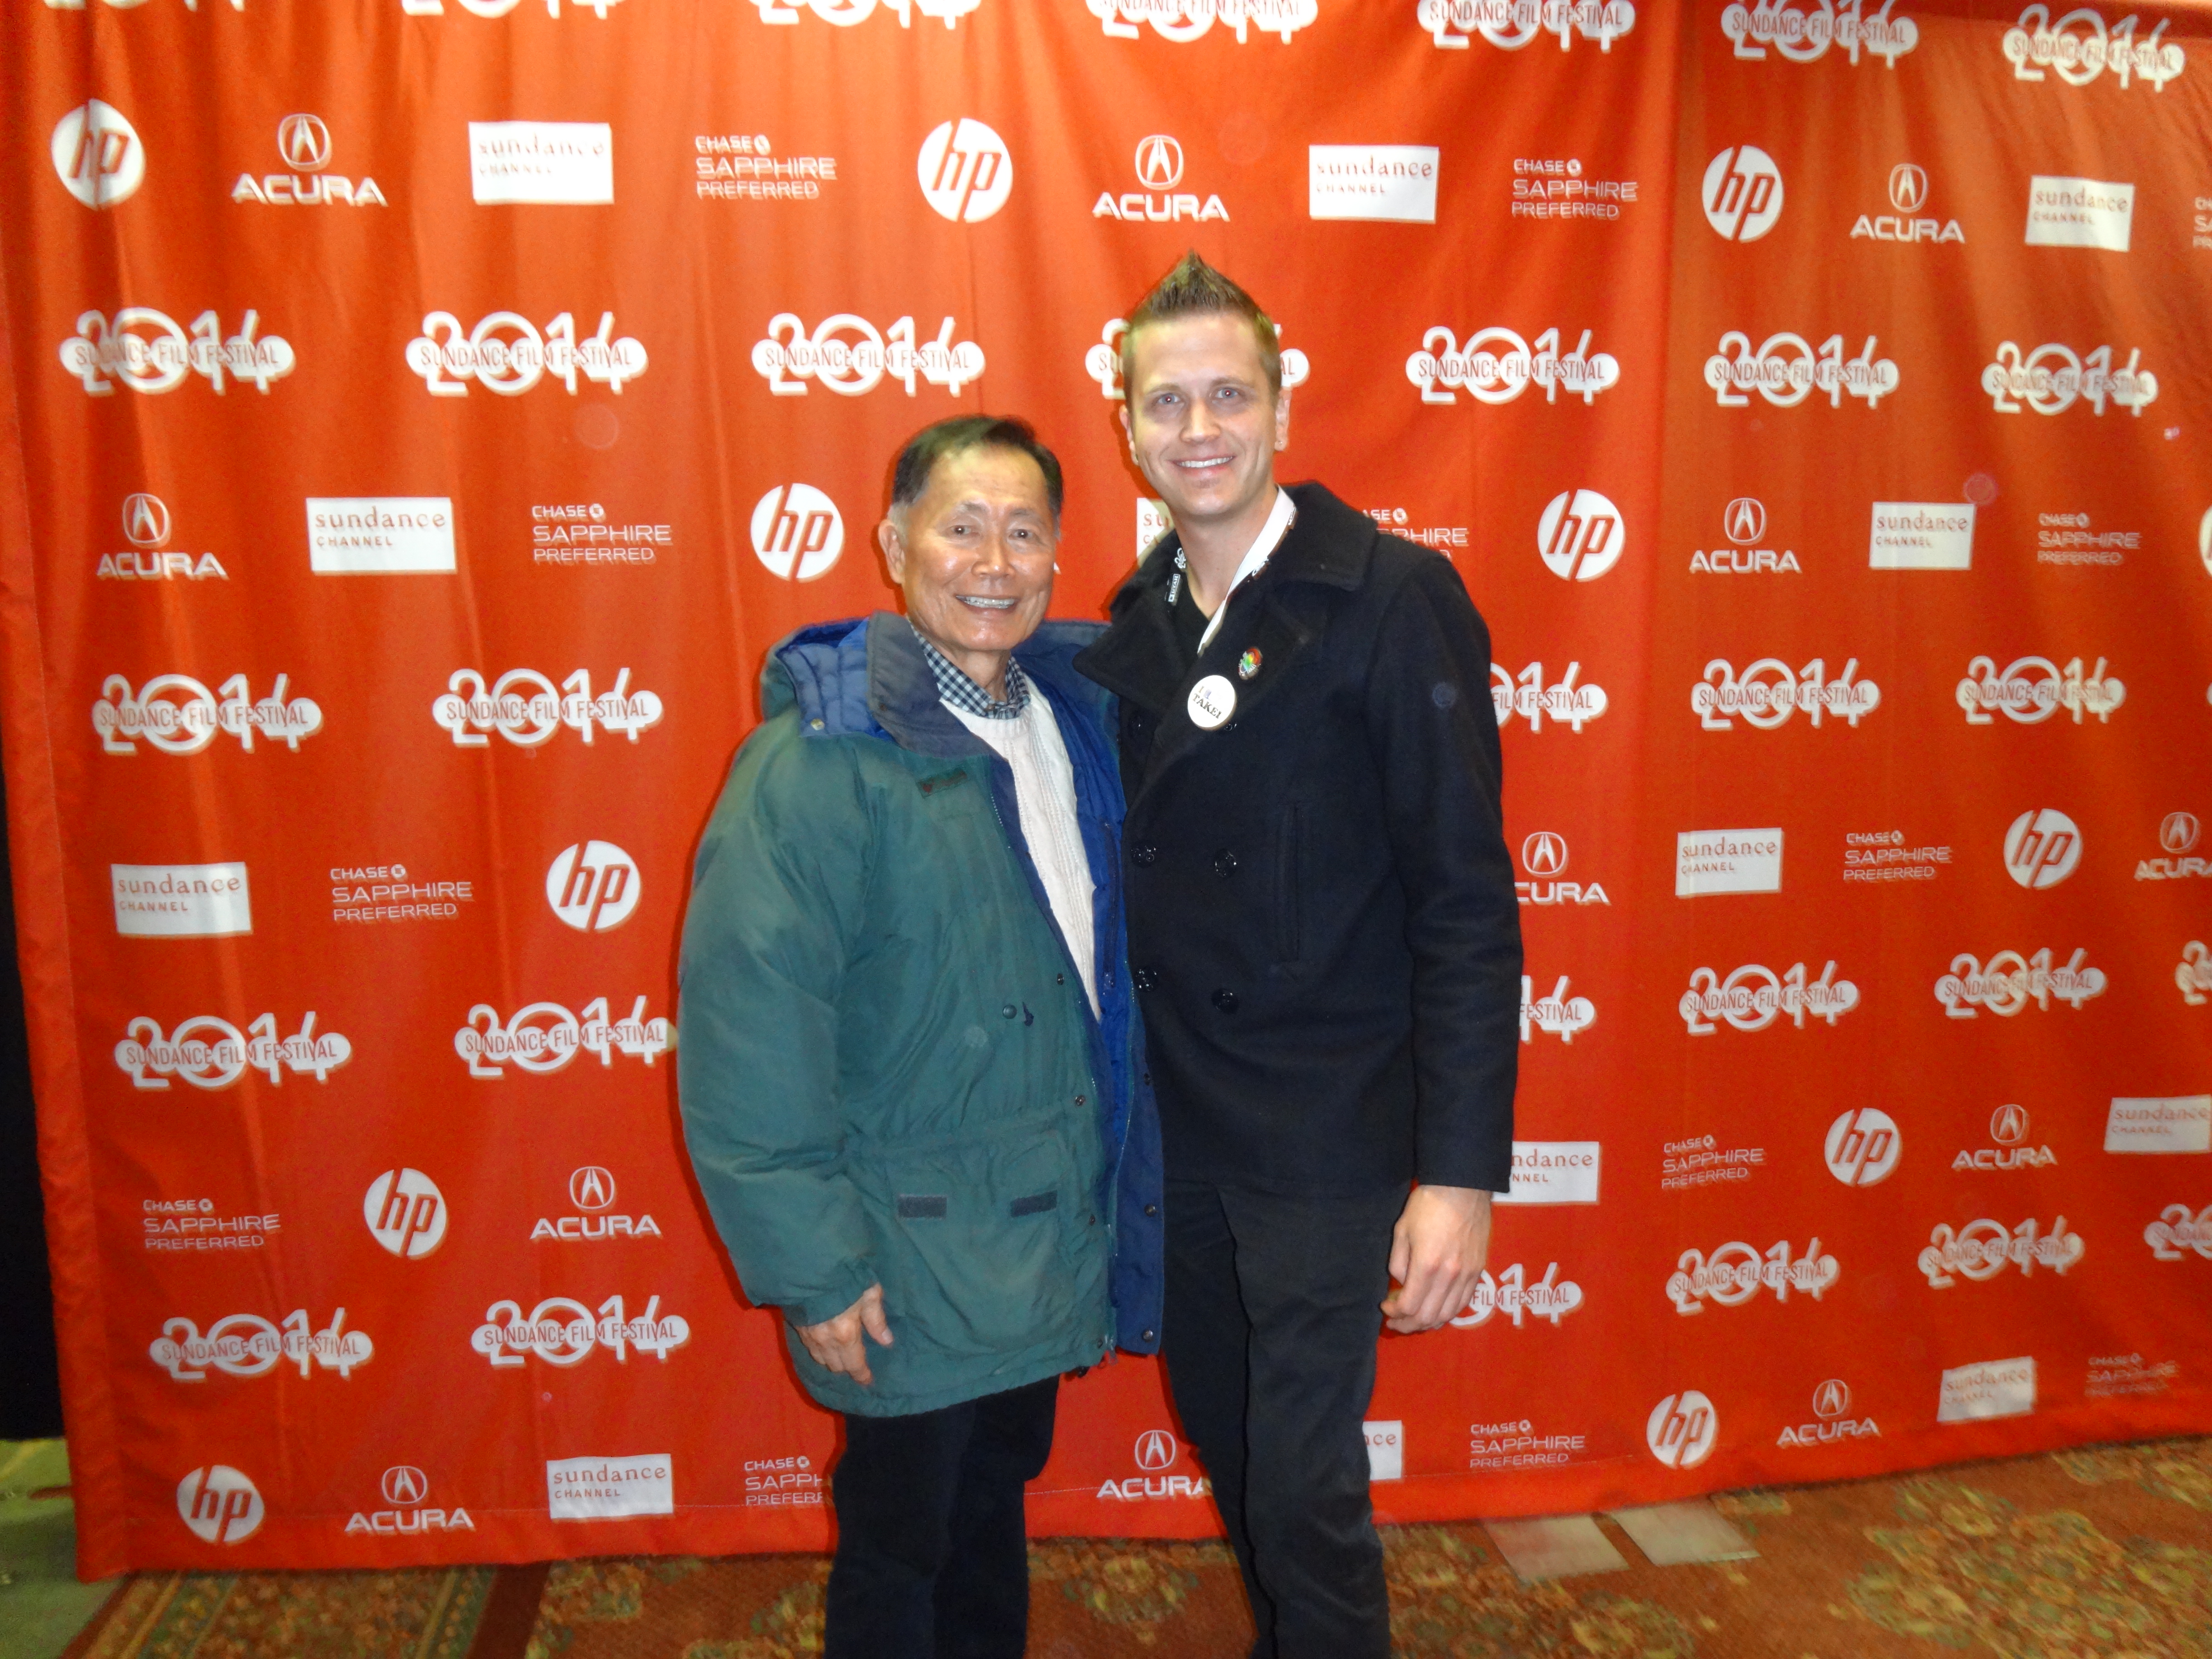 George Takei & Zachery McGinnis at the Sundance Film Festival screening of 